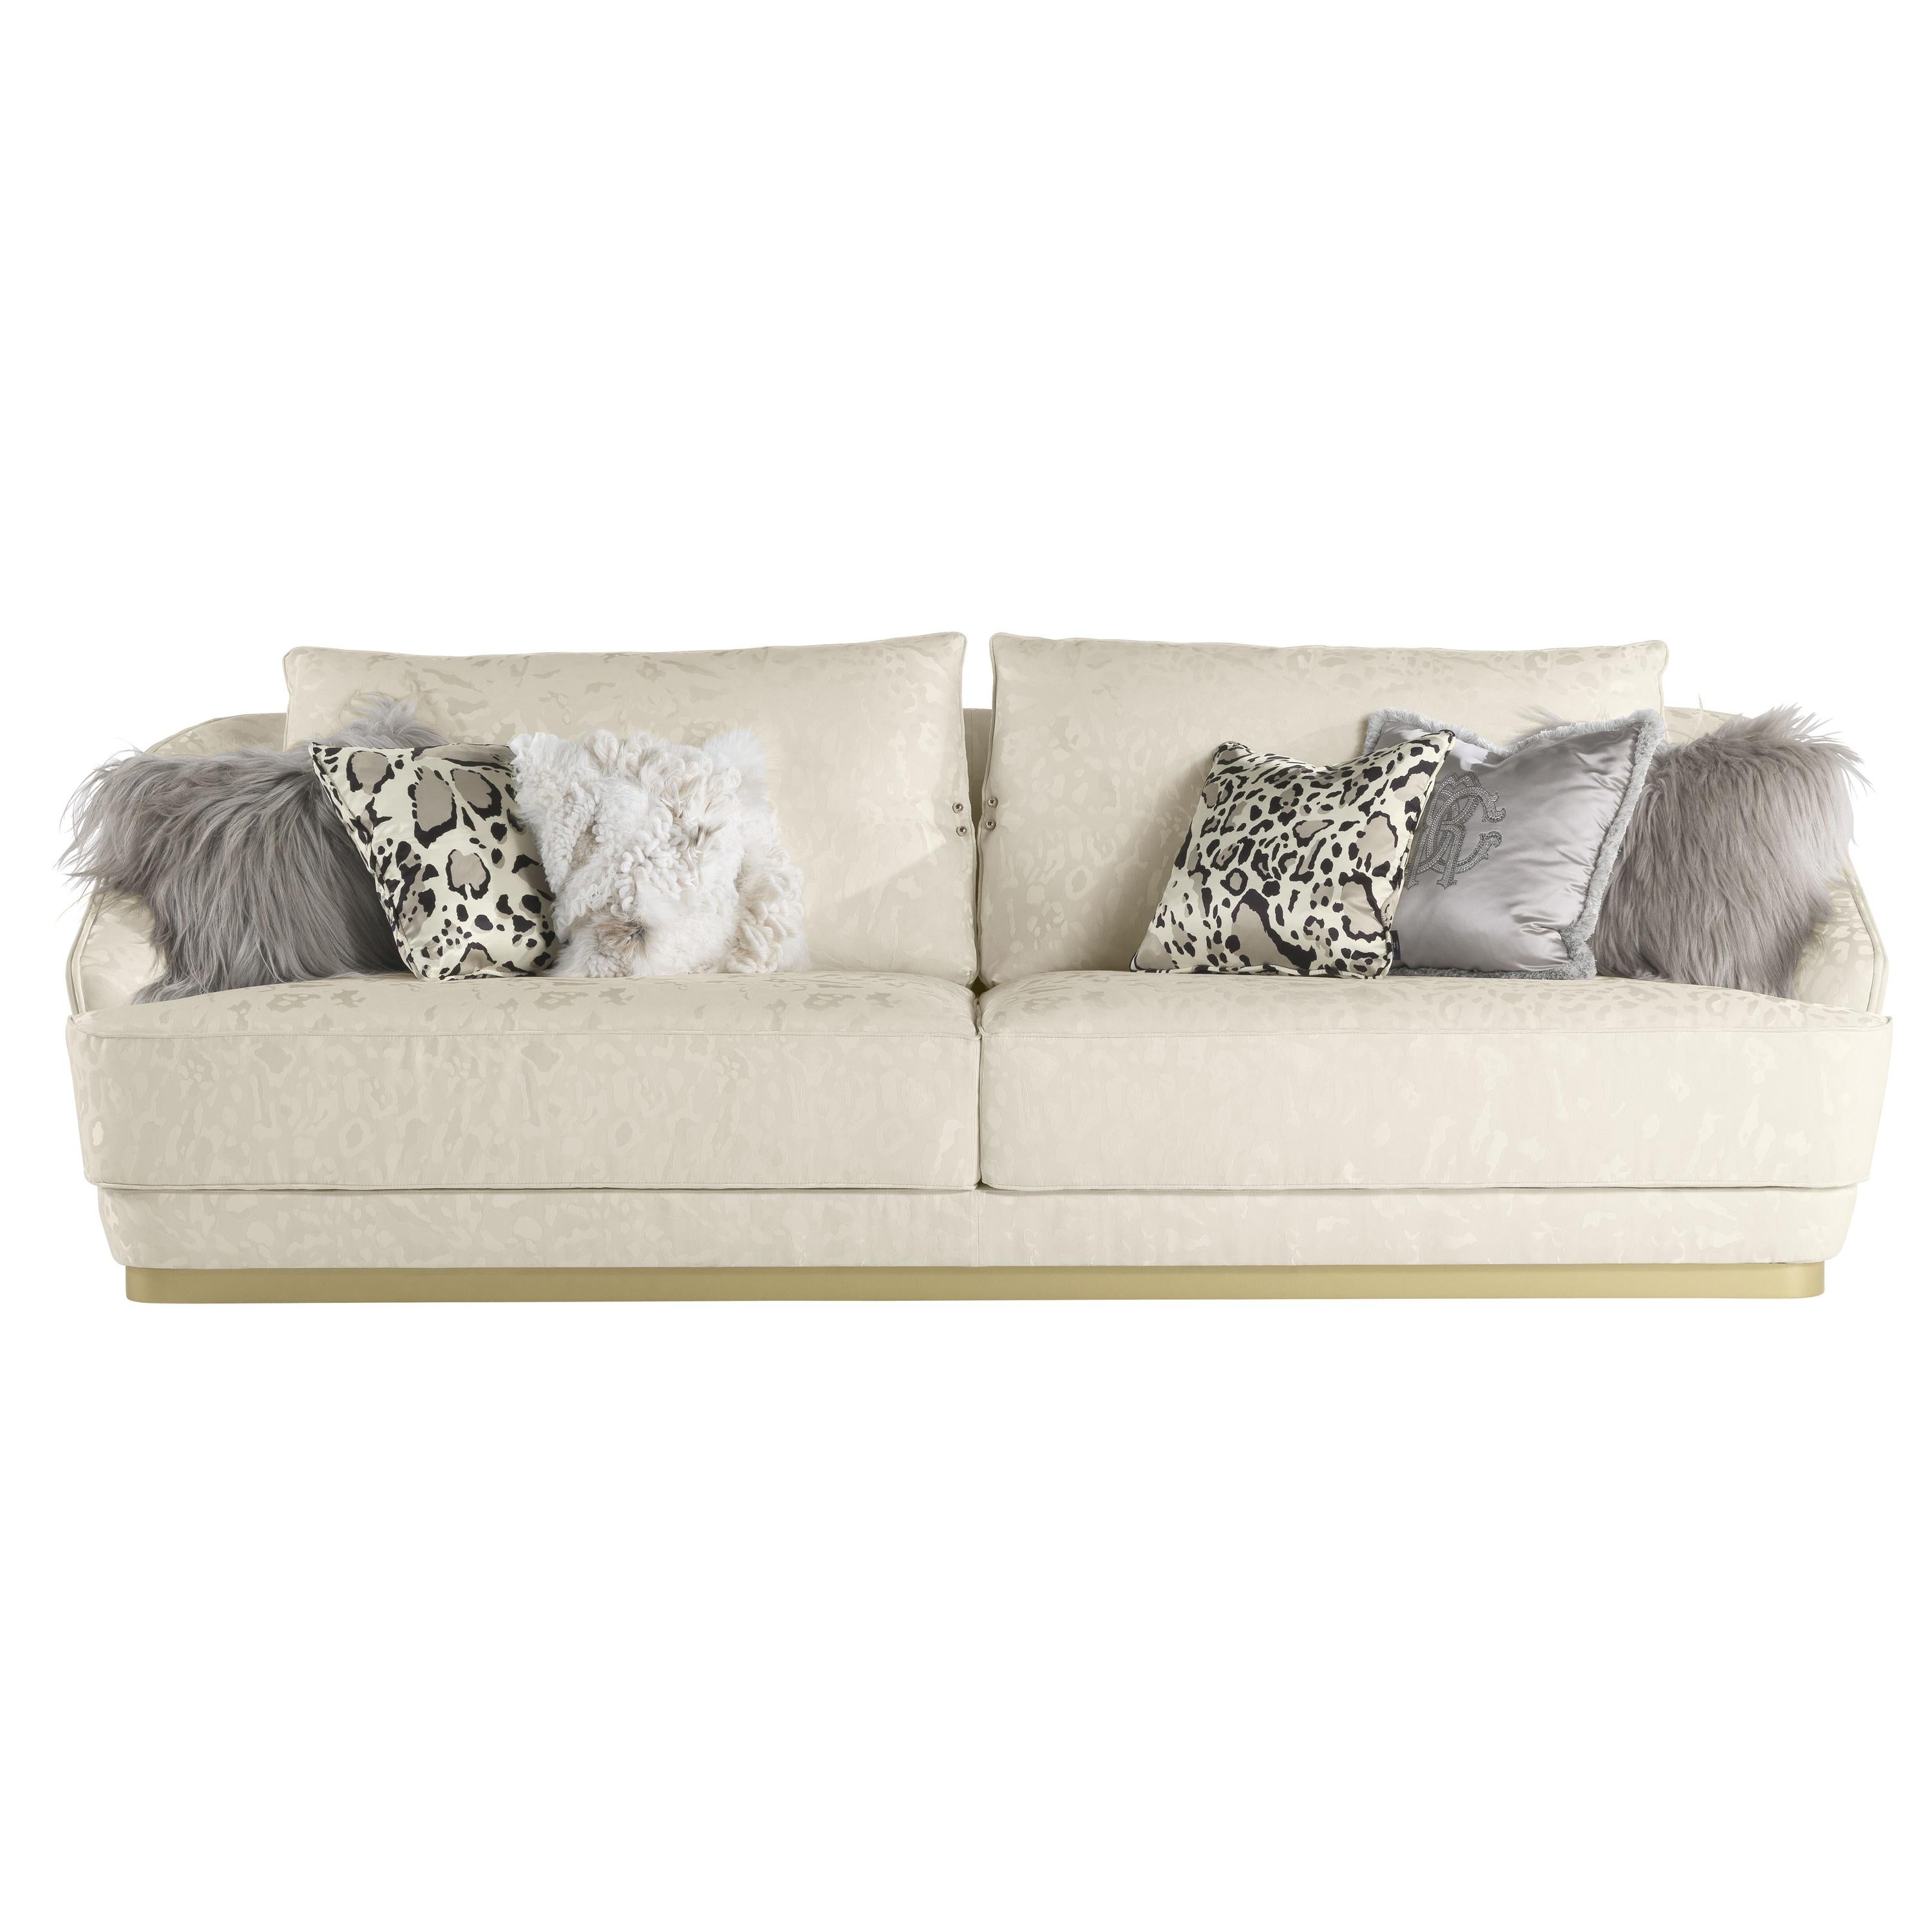 Roberto Cavalli Home Interiors Inanda 3-Seater Sofa in Fabric and Leather 